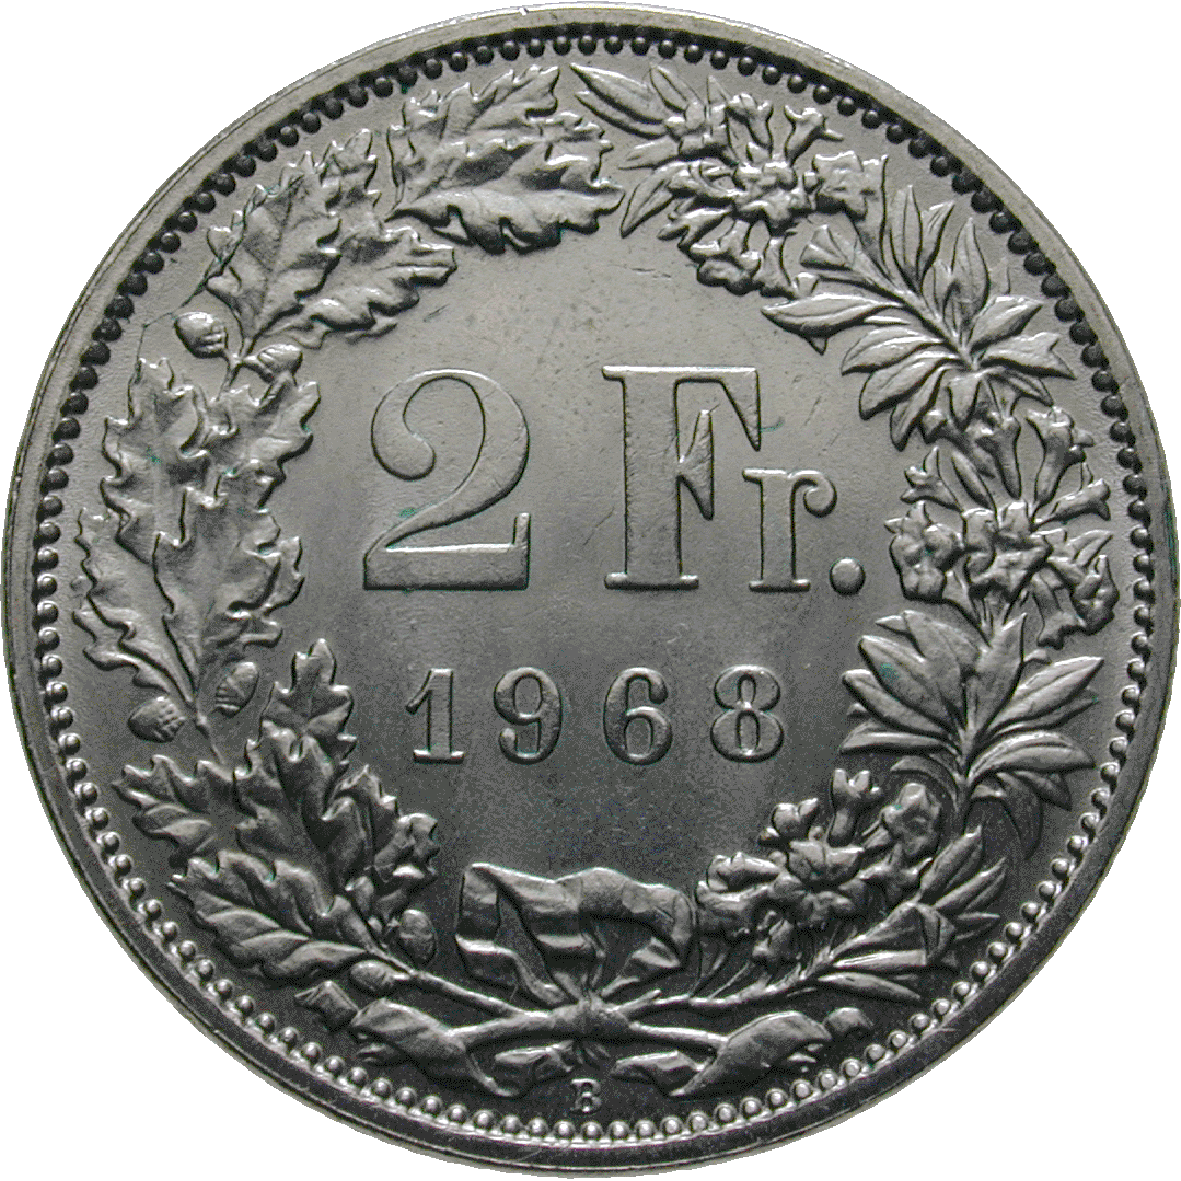 Schweizerische Eidgenossenschaft, 2 Franken 1968  (reverse)